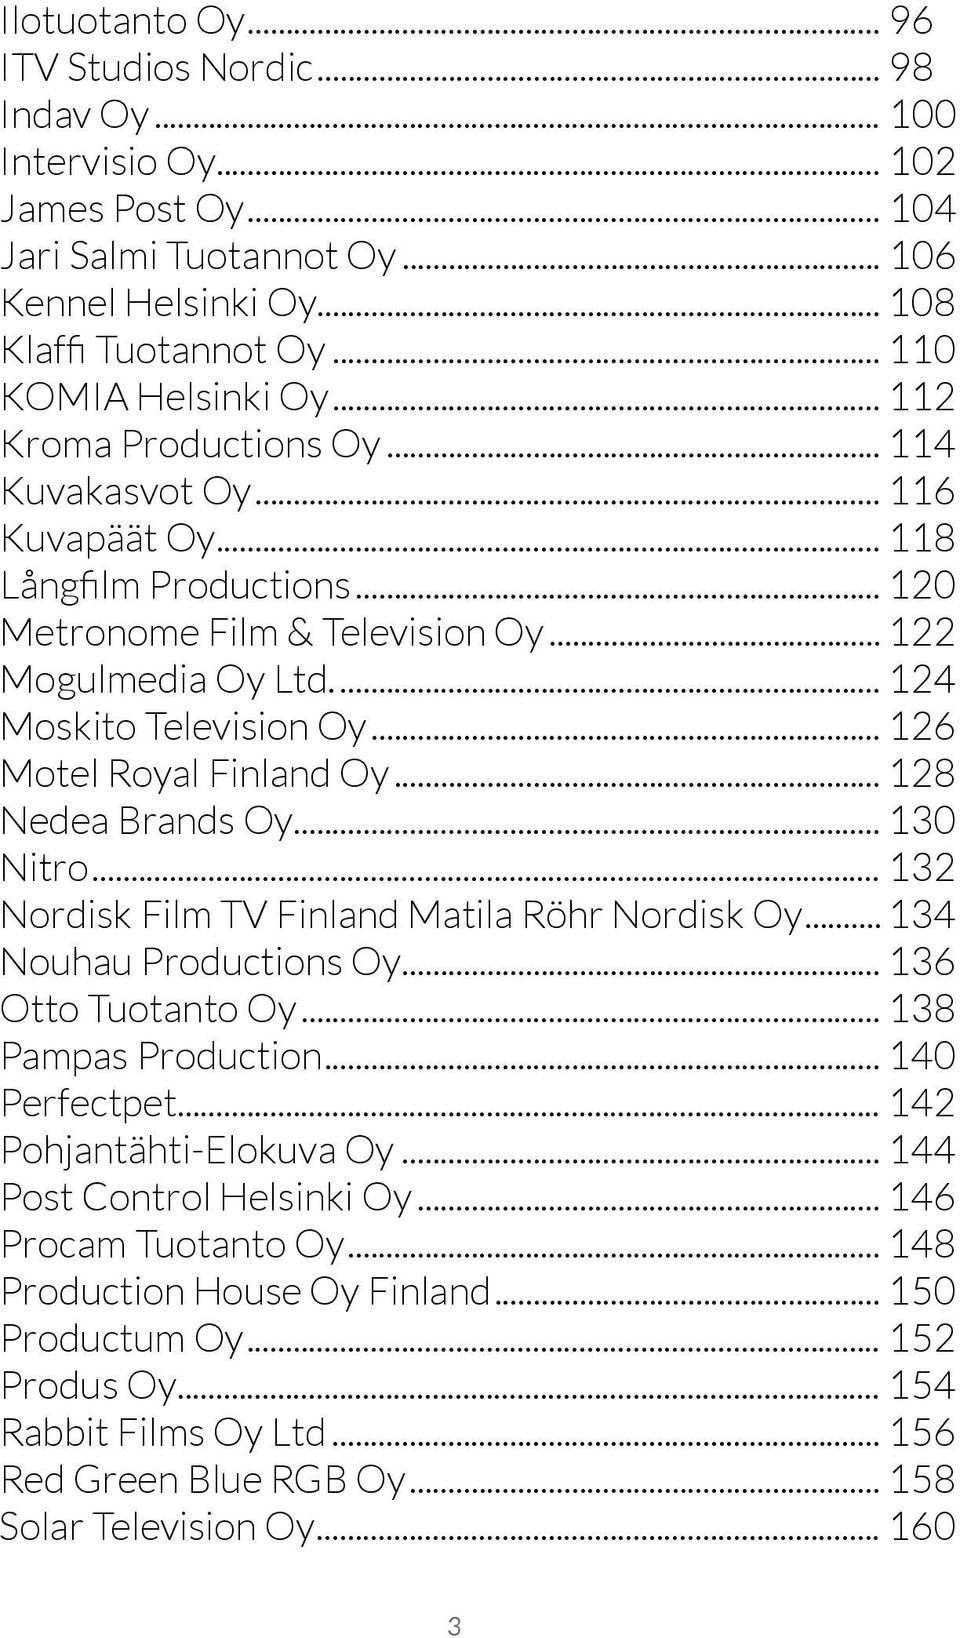 .. 124 Moskito Television Oy... 126 Motel Royal Finland Oy... 128 Nedea Brands Oy... 130 Nitro... 132 Nordisk Film TV Finland Matila Röhr Nordisk Oy... 134 Nouhau Productions Oy... 136 Otto Tuotanto Oy.